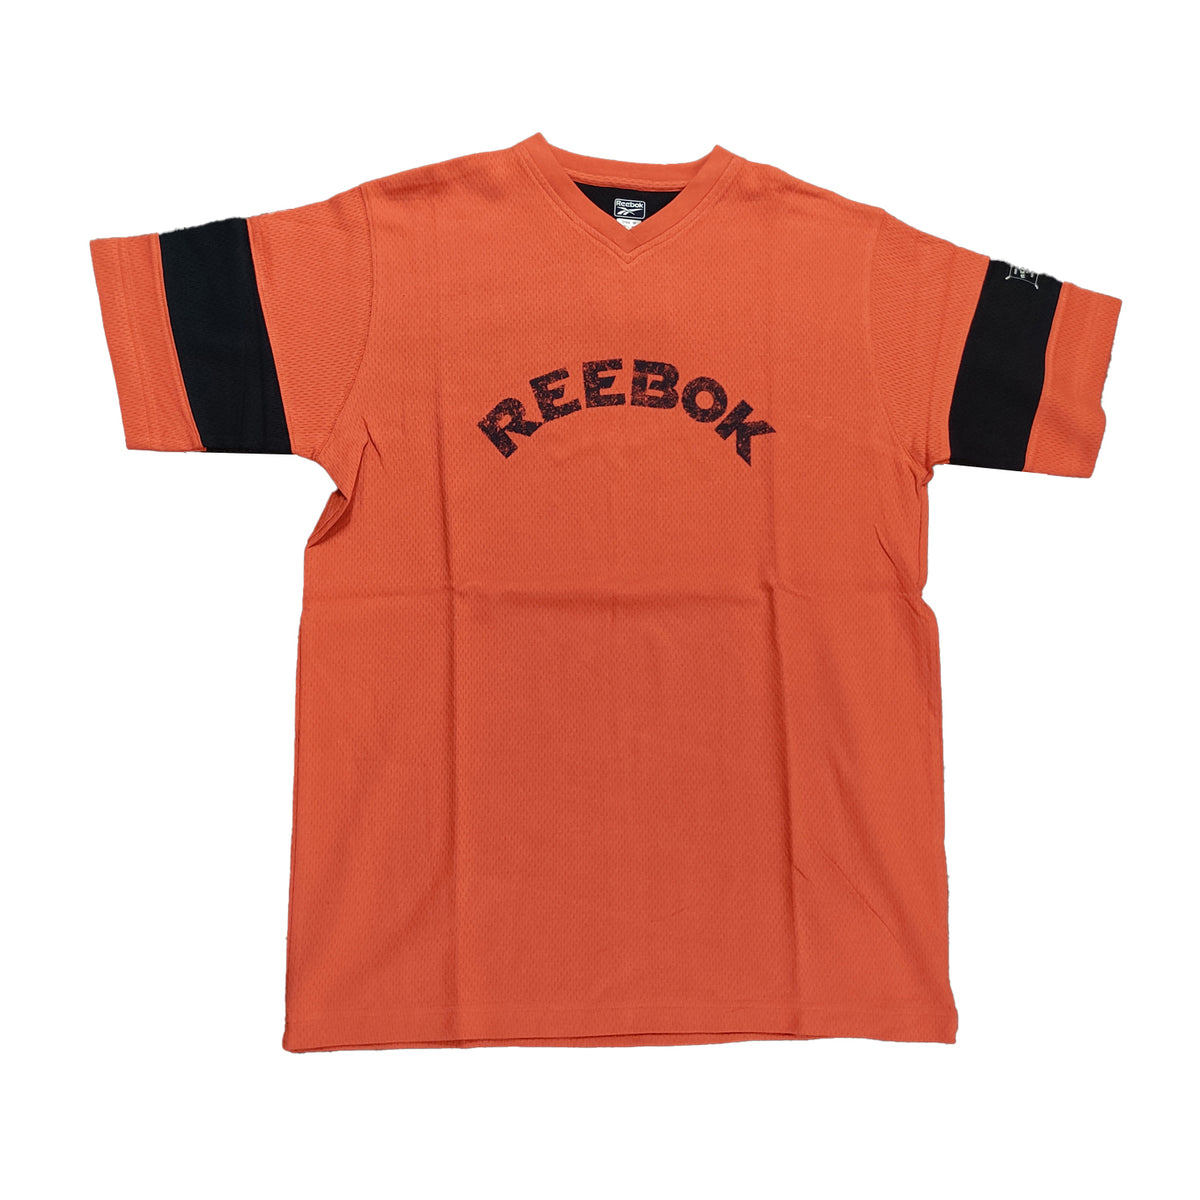 Reebok Mens Clearance Panel Sleeves Orange V-Neck T-Shirt - Medium